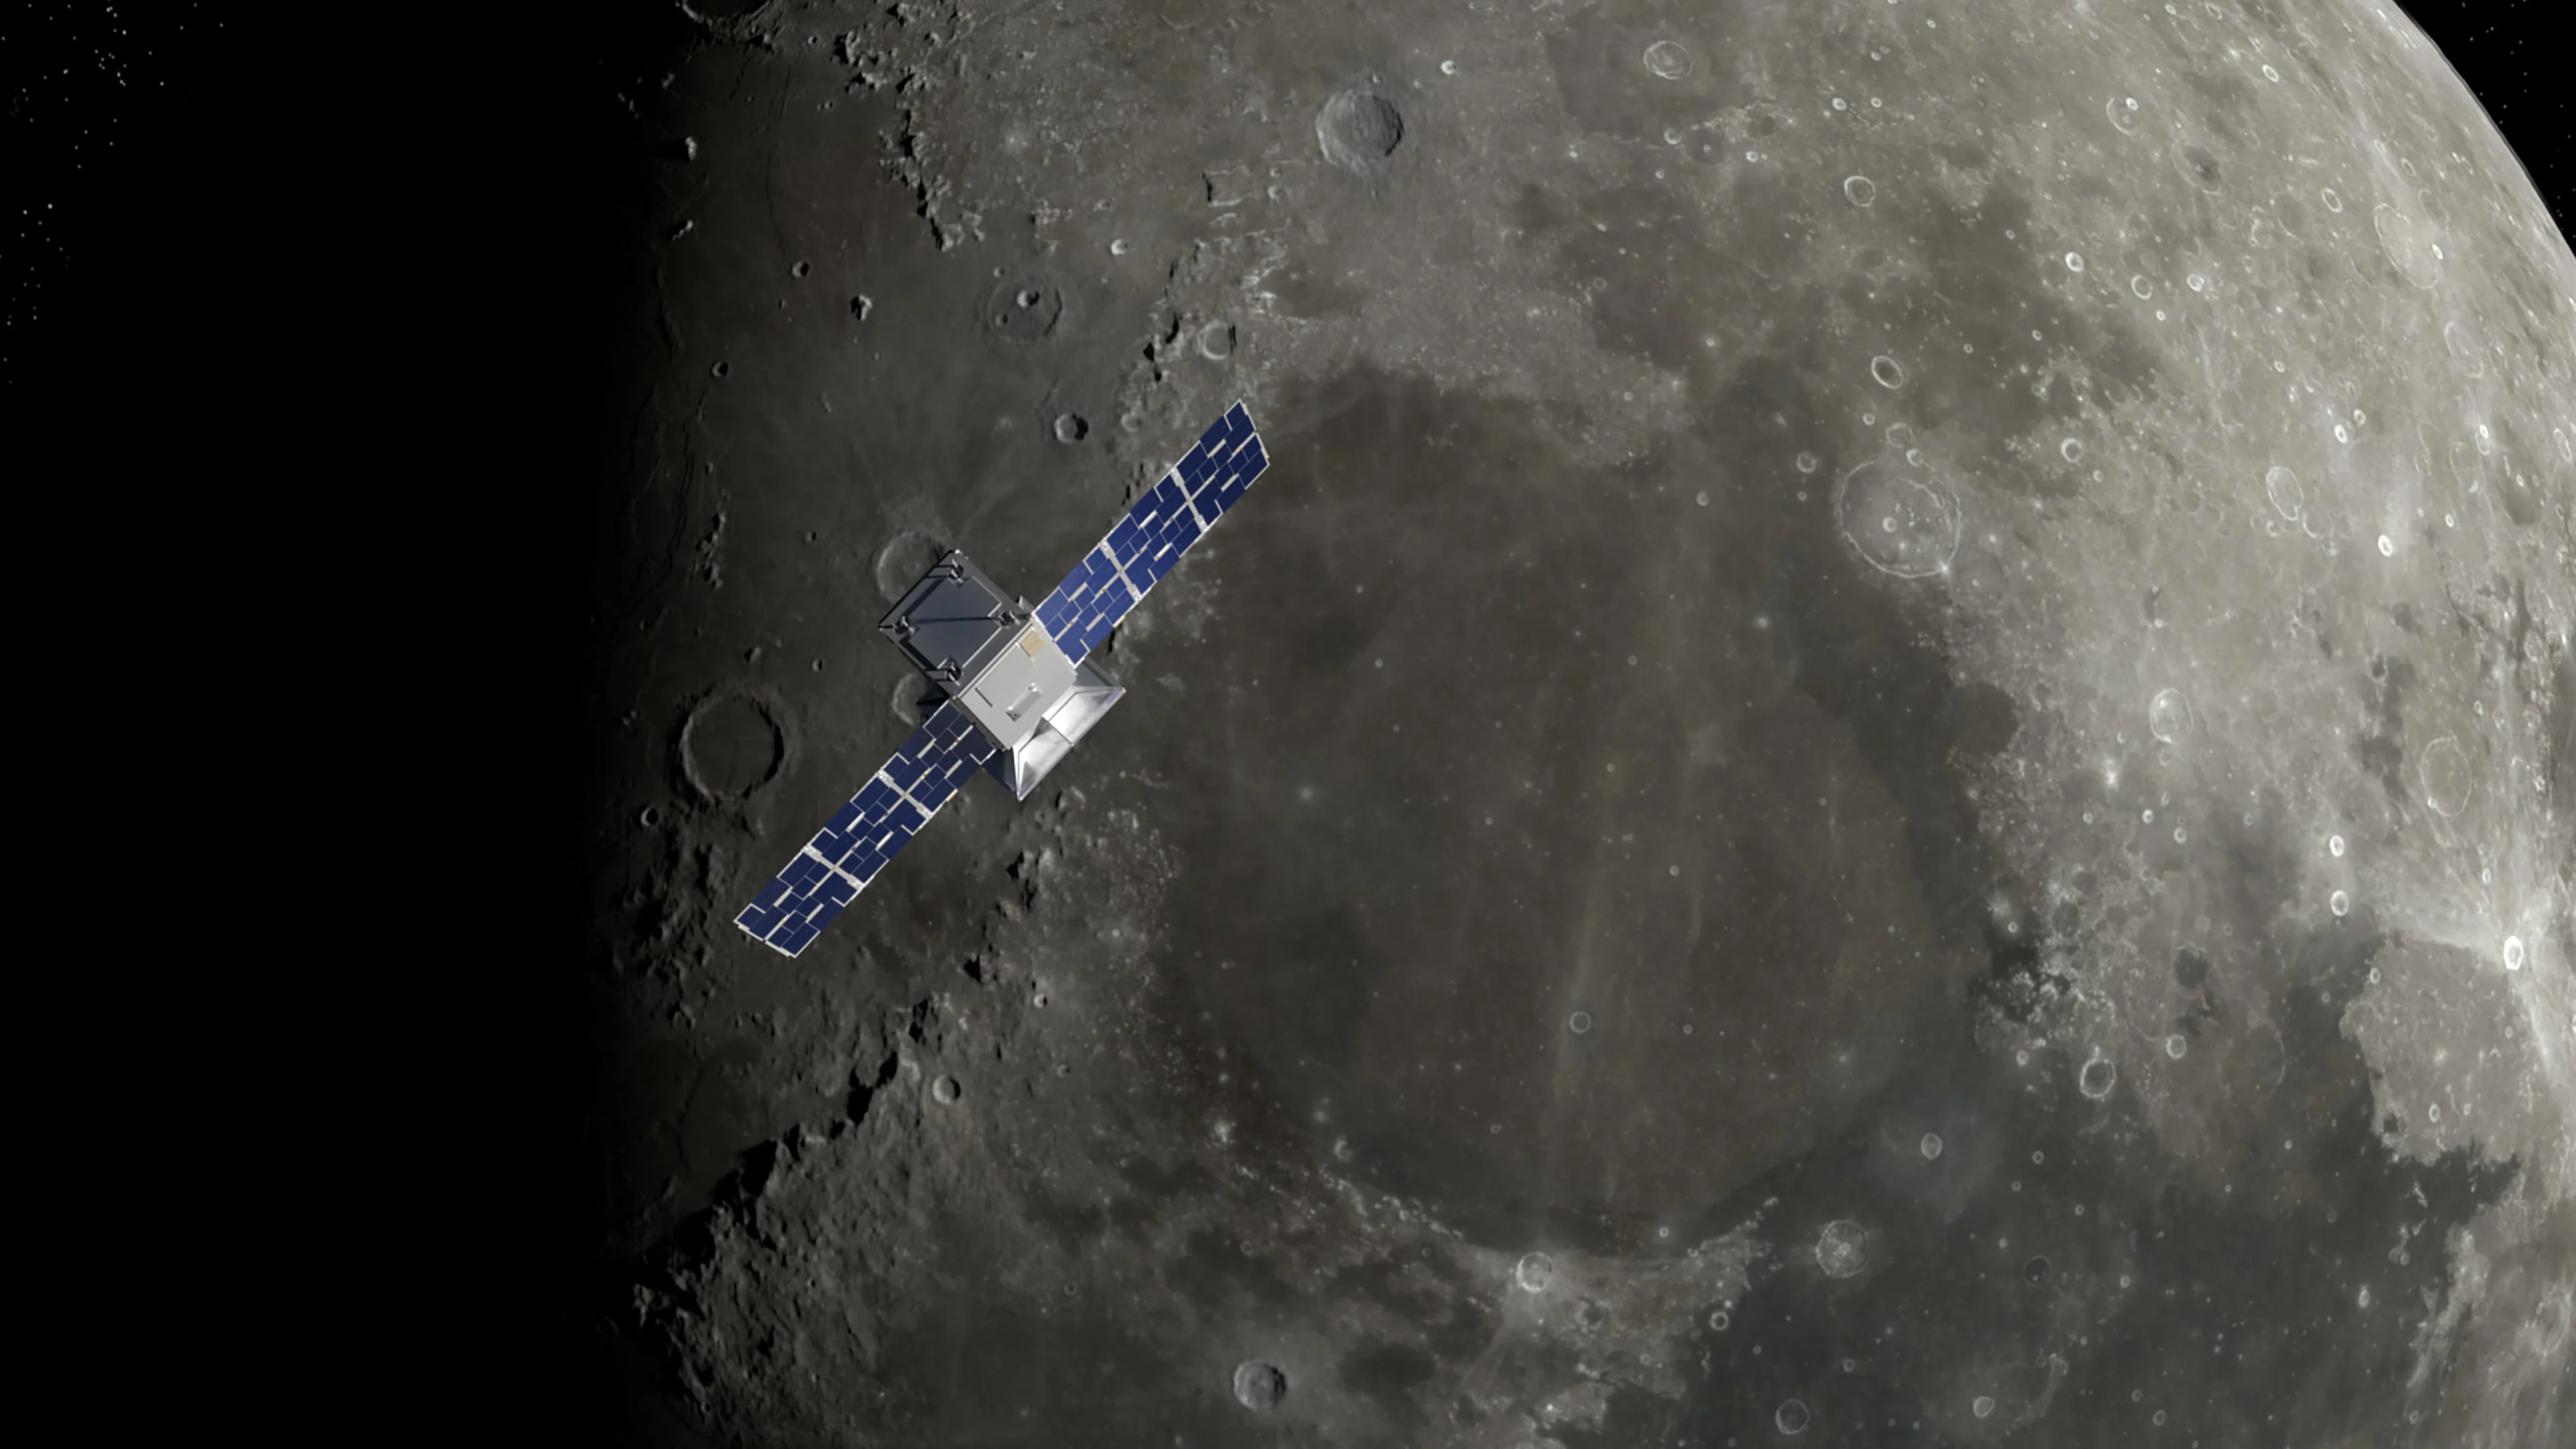 Image of CAPSTONE satellite over the lunar North Pole